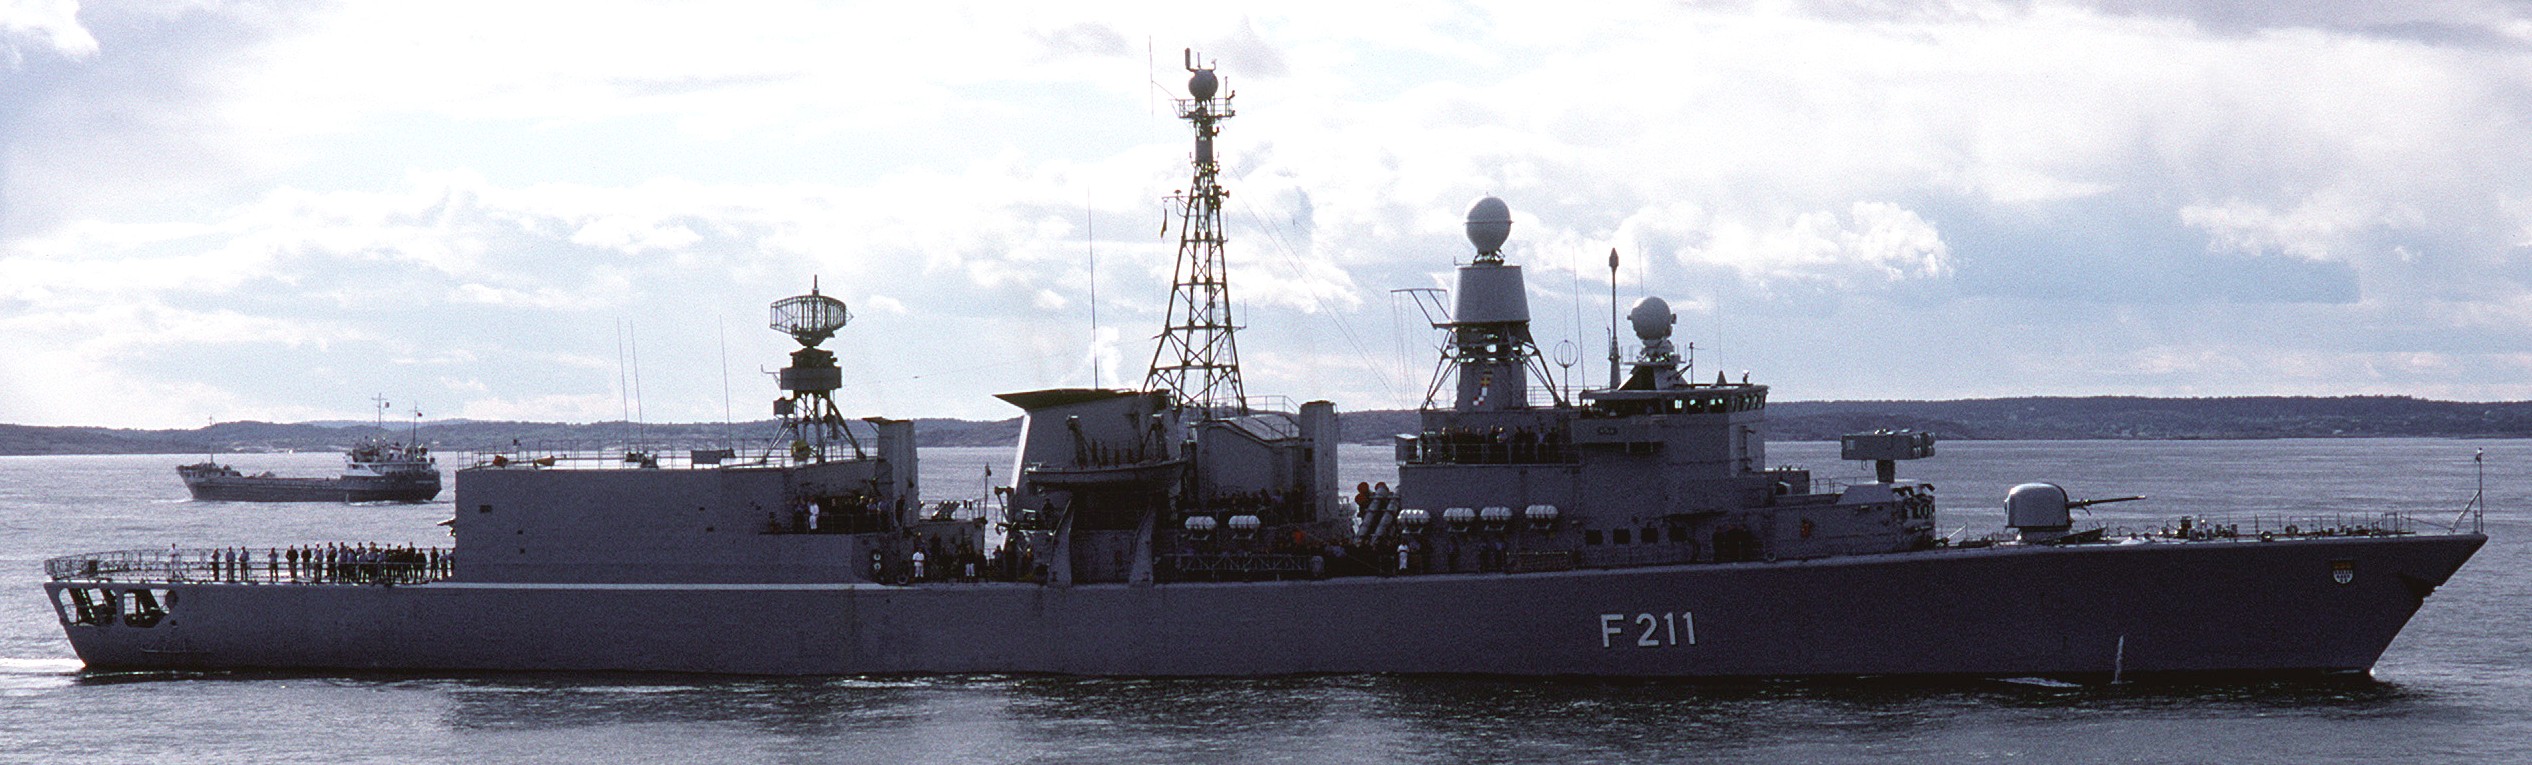 f-211 fgs koln köln type 122 bremen class frigate german navy 07